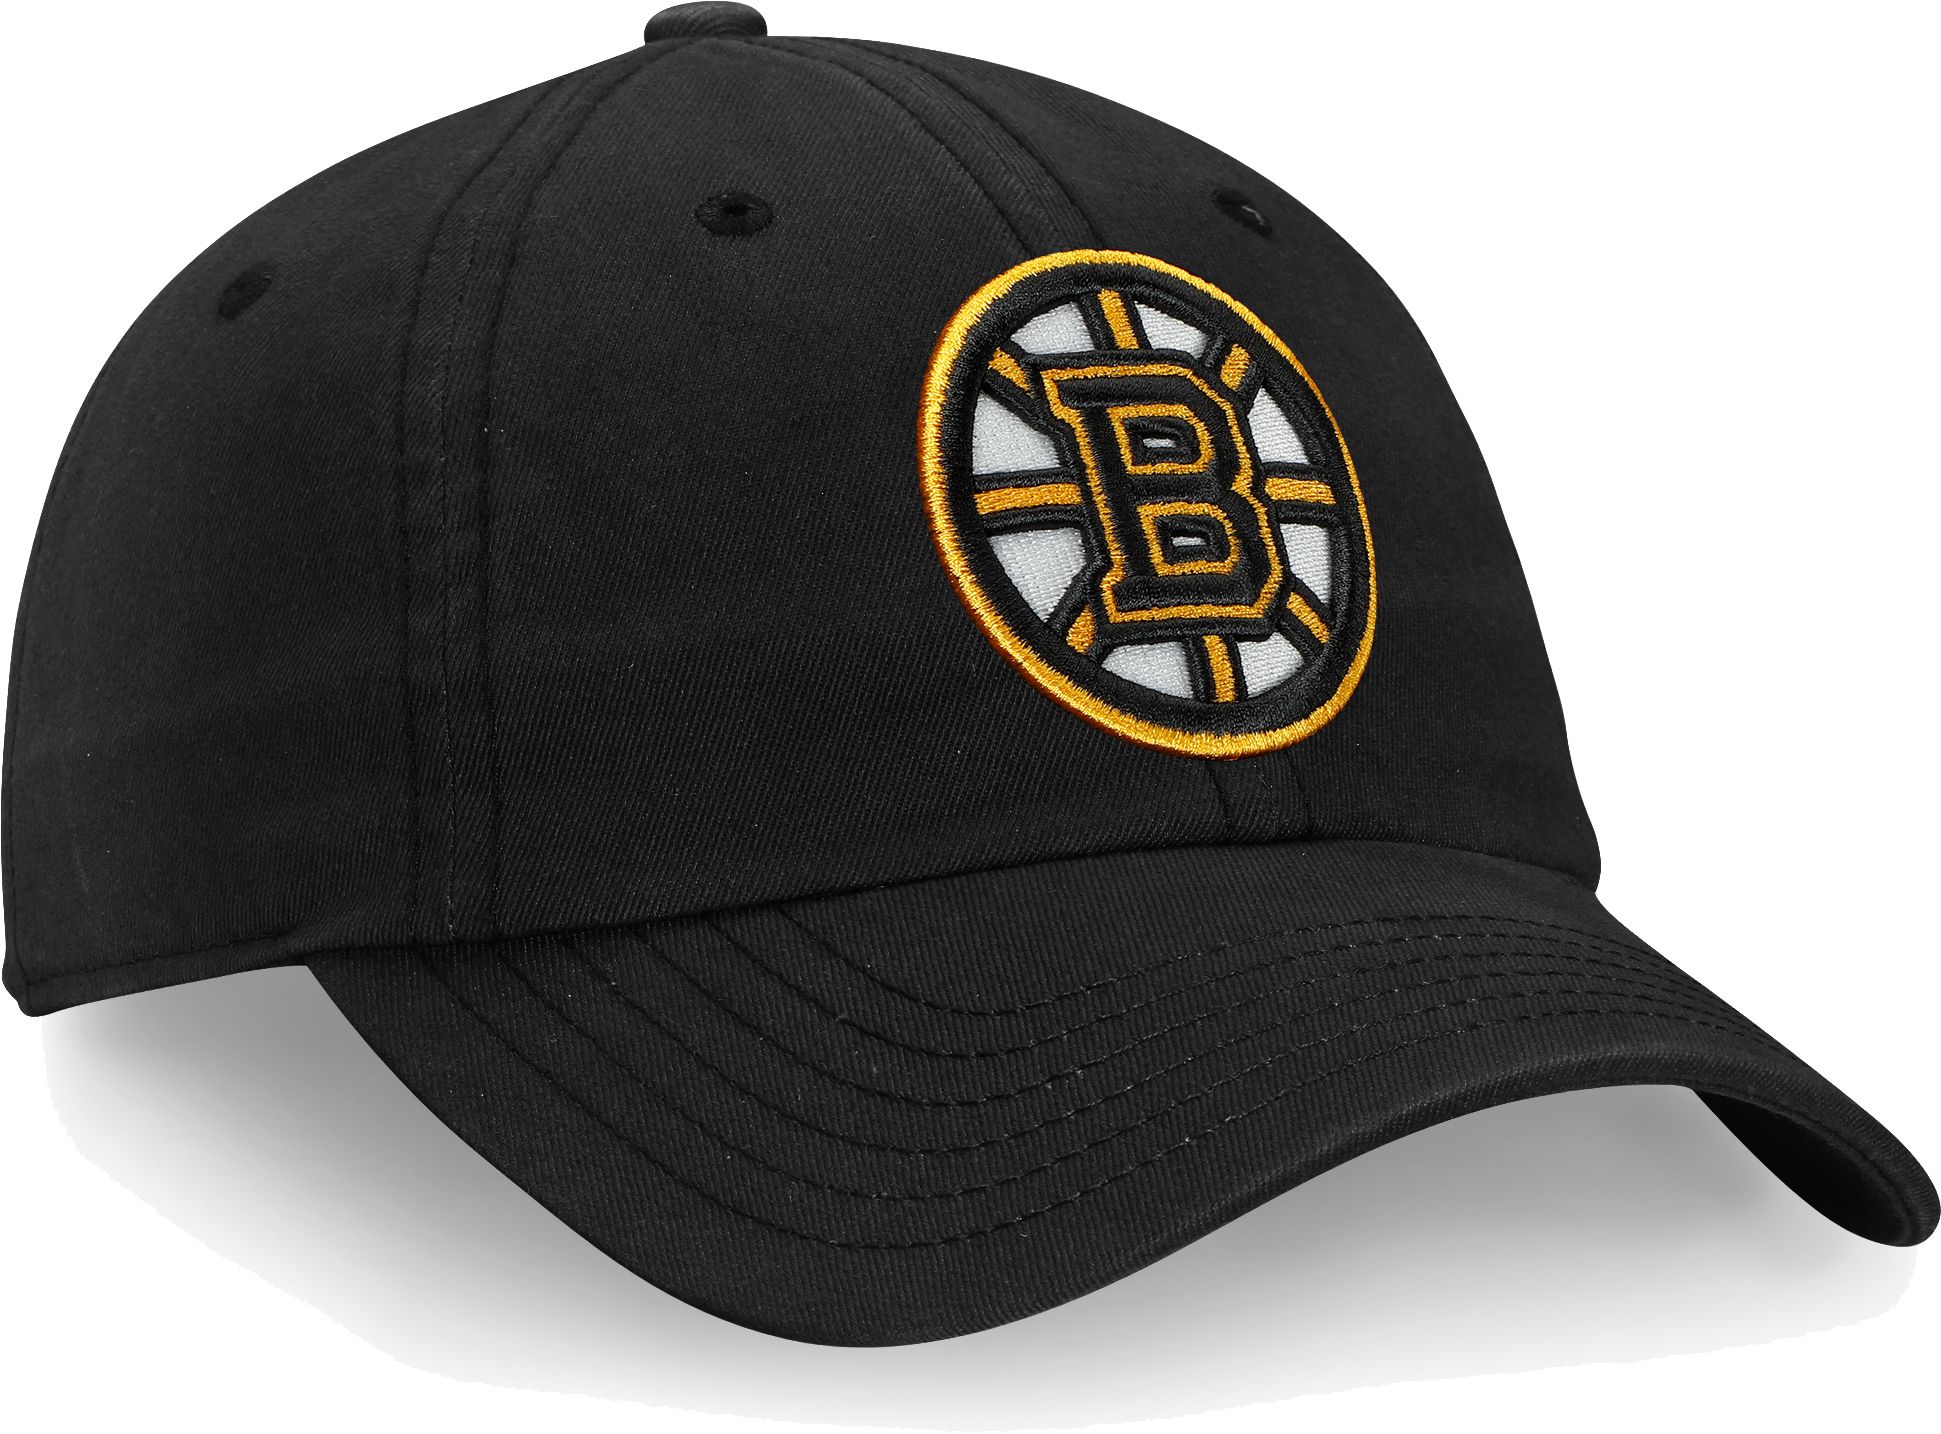 Men's Fanatics Branded Heather Gray Boston Bruins Primary Logo Pullover  Hoodie